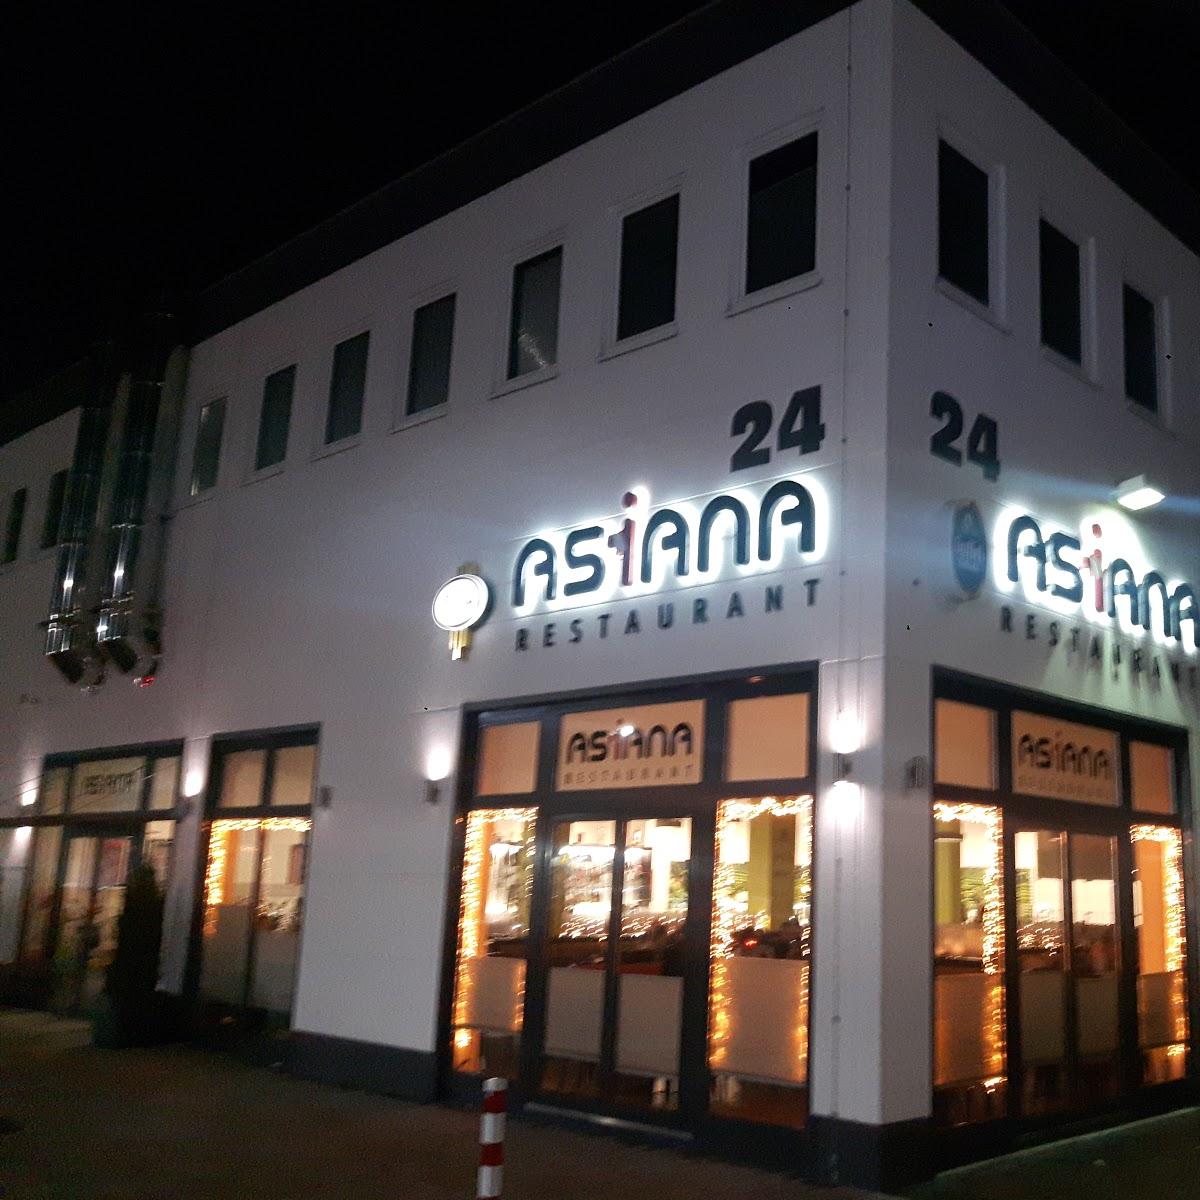 Restaurant "Asiana Restaurant" in  Grevenbroich